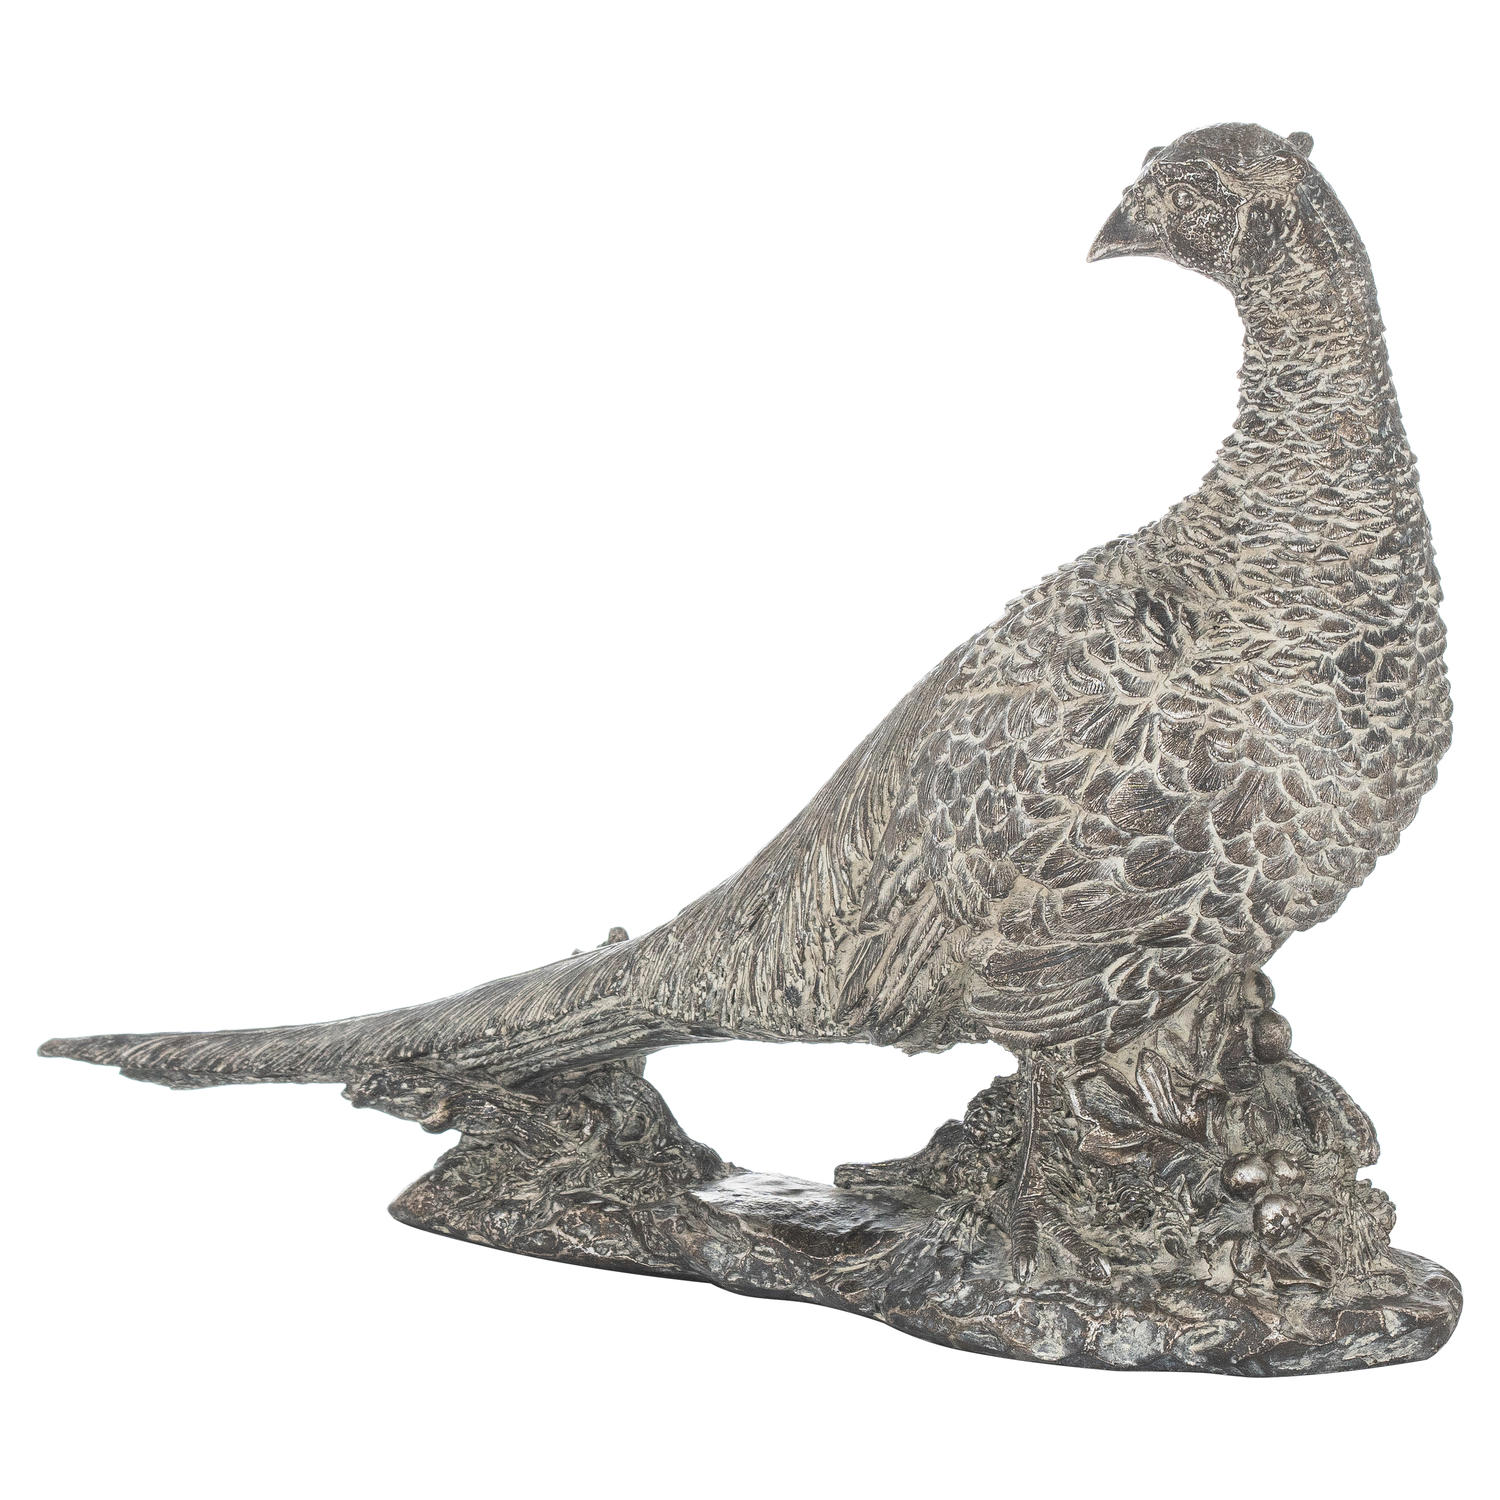 Antique Silver Cock Pheasant Ornament - Image 1